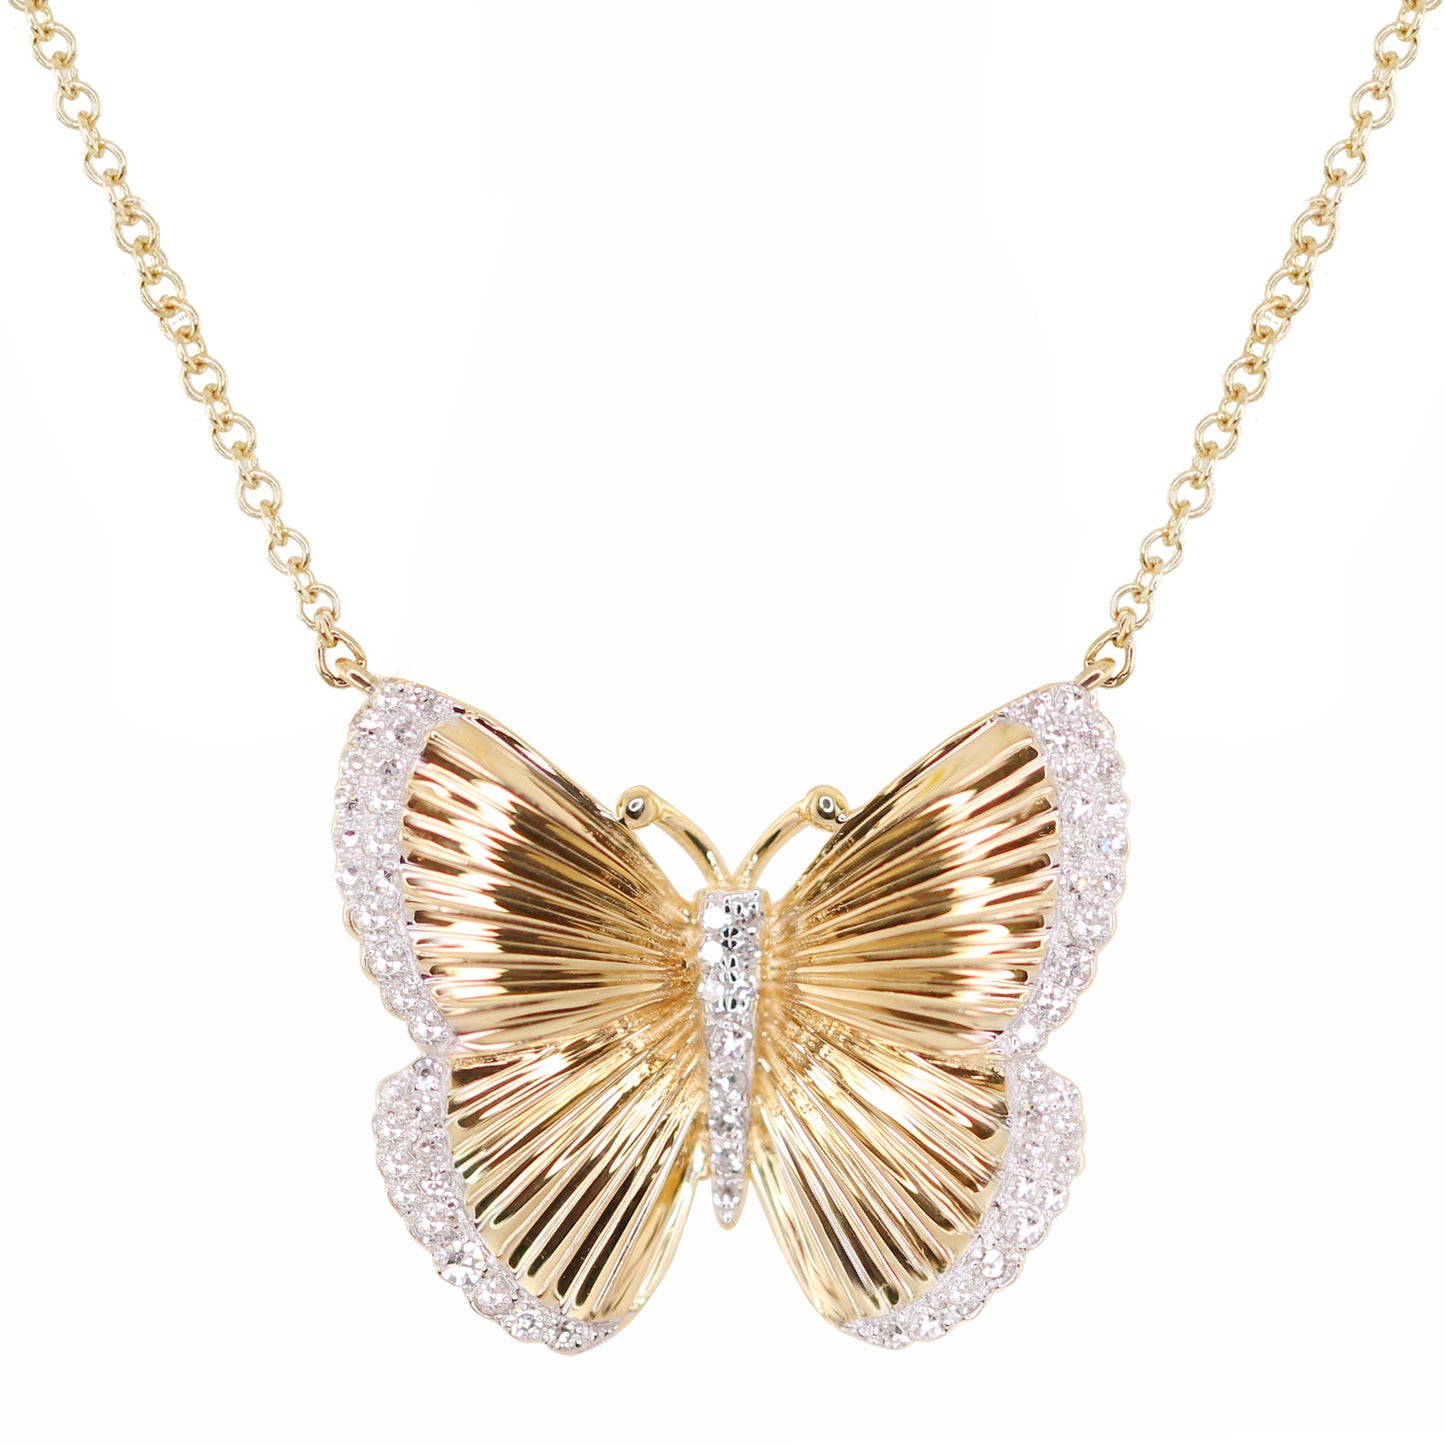 14kt gold and diamond butterfly burst necklace